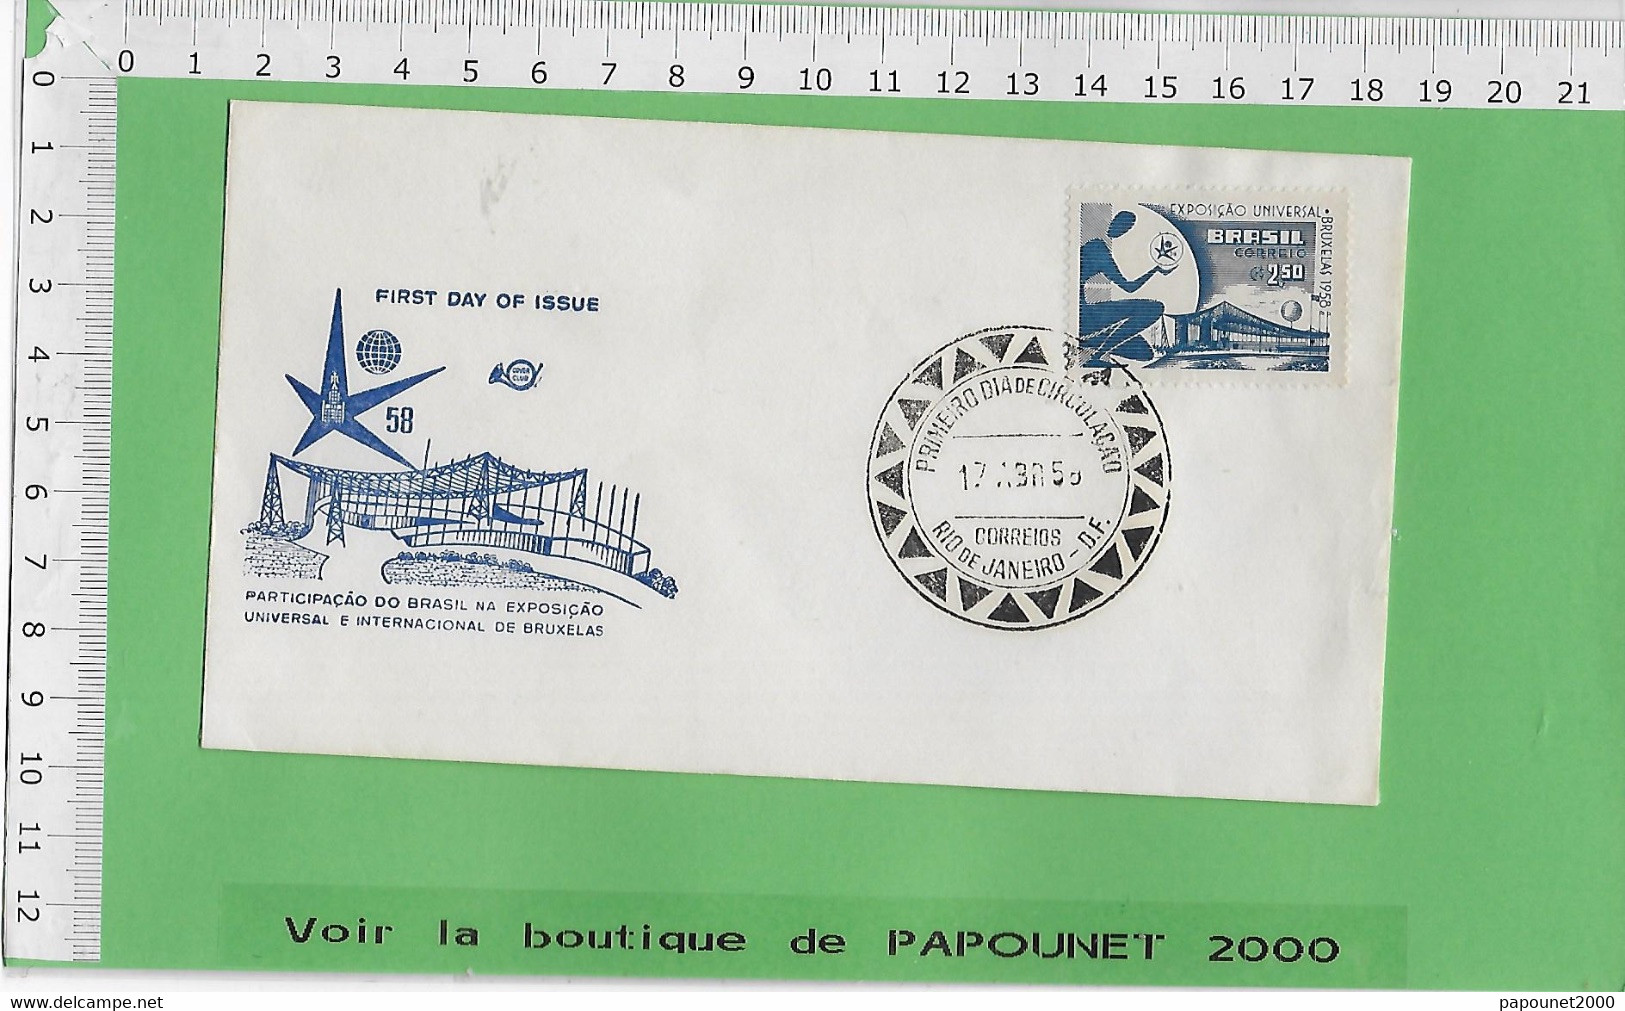 02581 - E BE04 1000-EXPO 58 : Timbre*Enveloppe /  PAVILLON DU BRESIL - 1958 – Brüssel (Belgien)